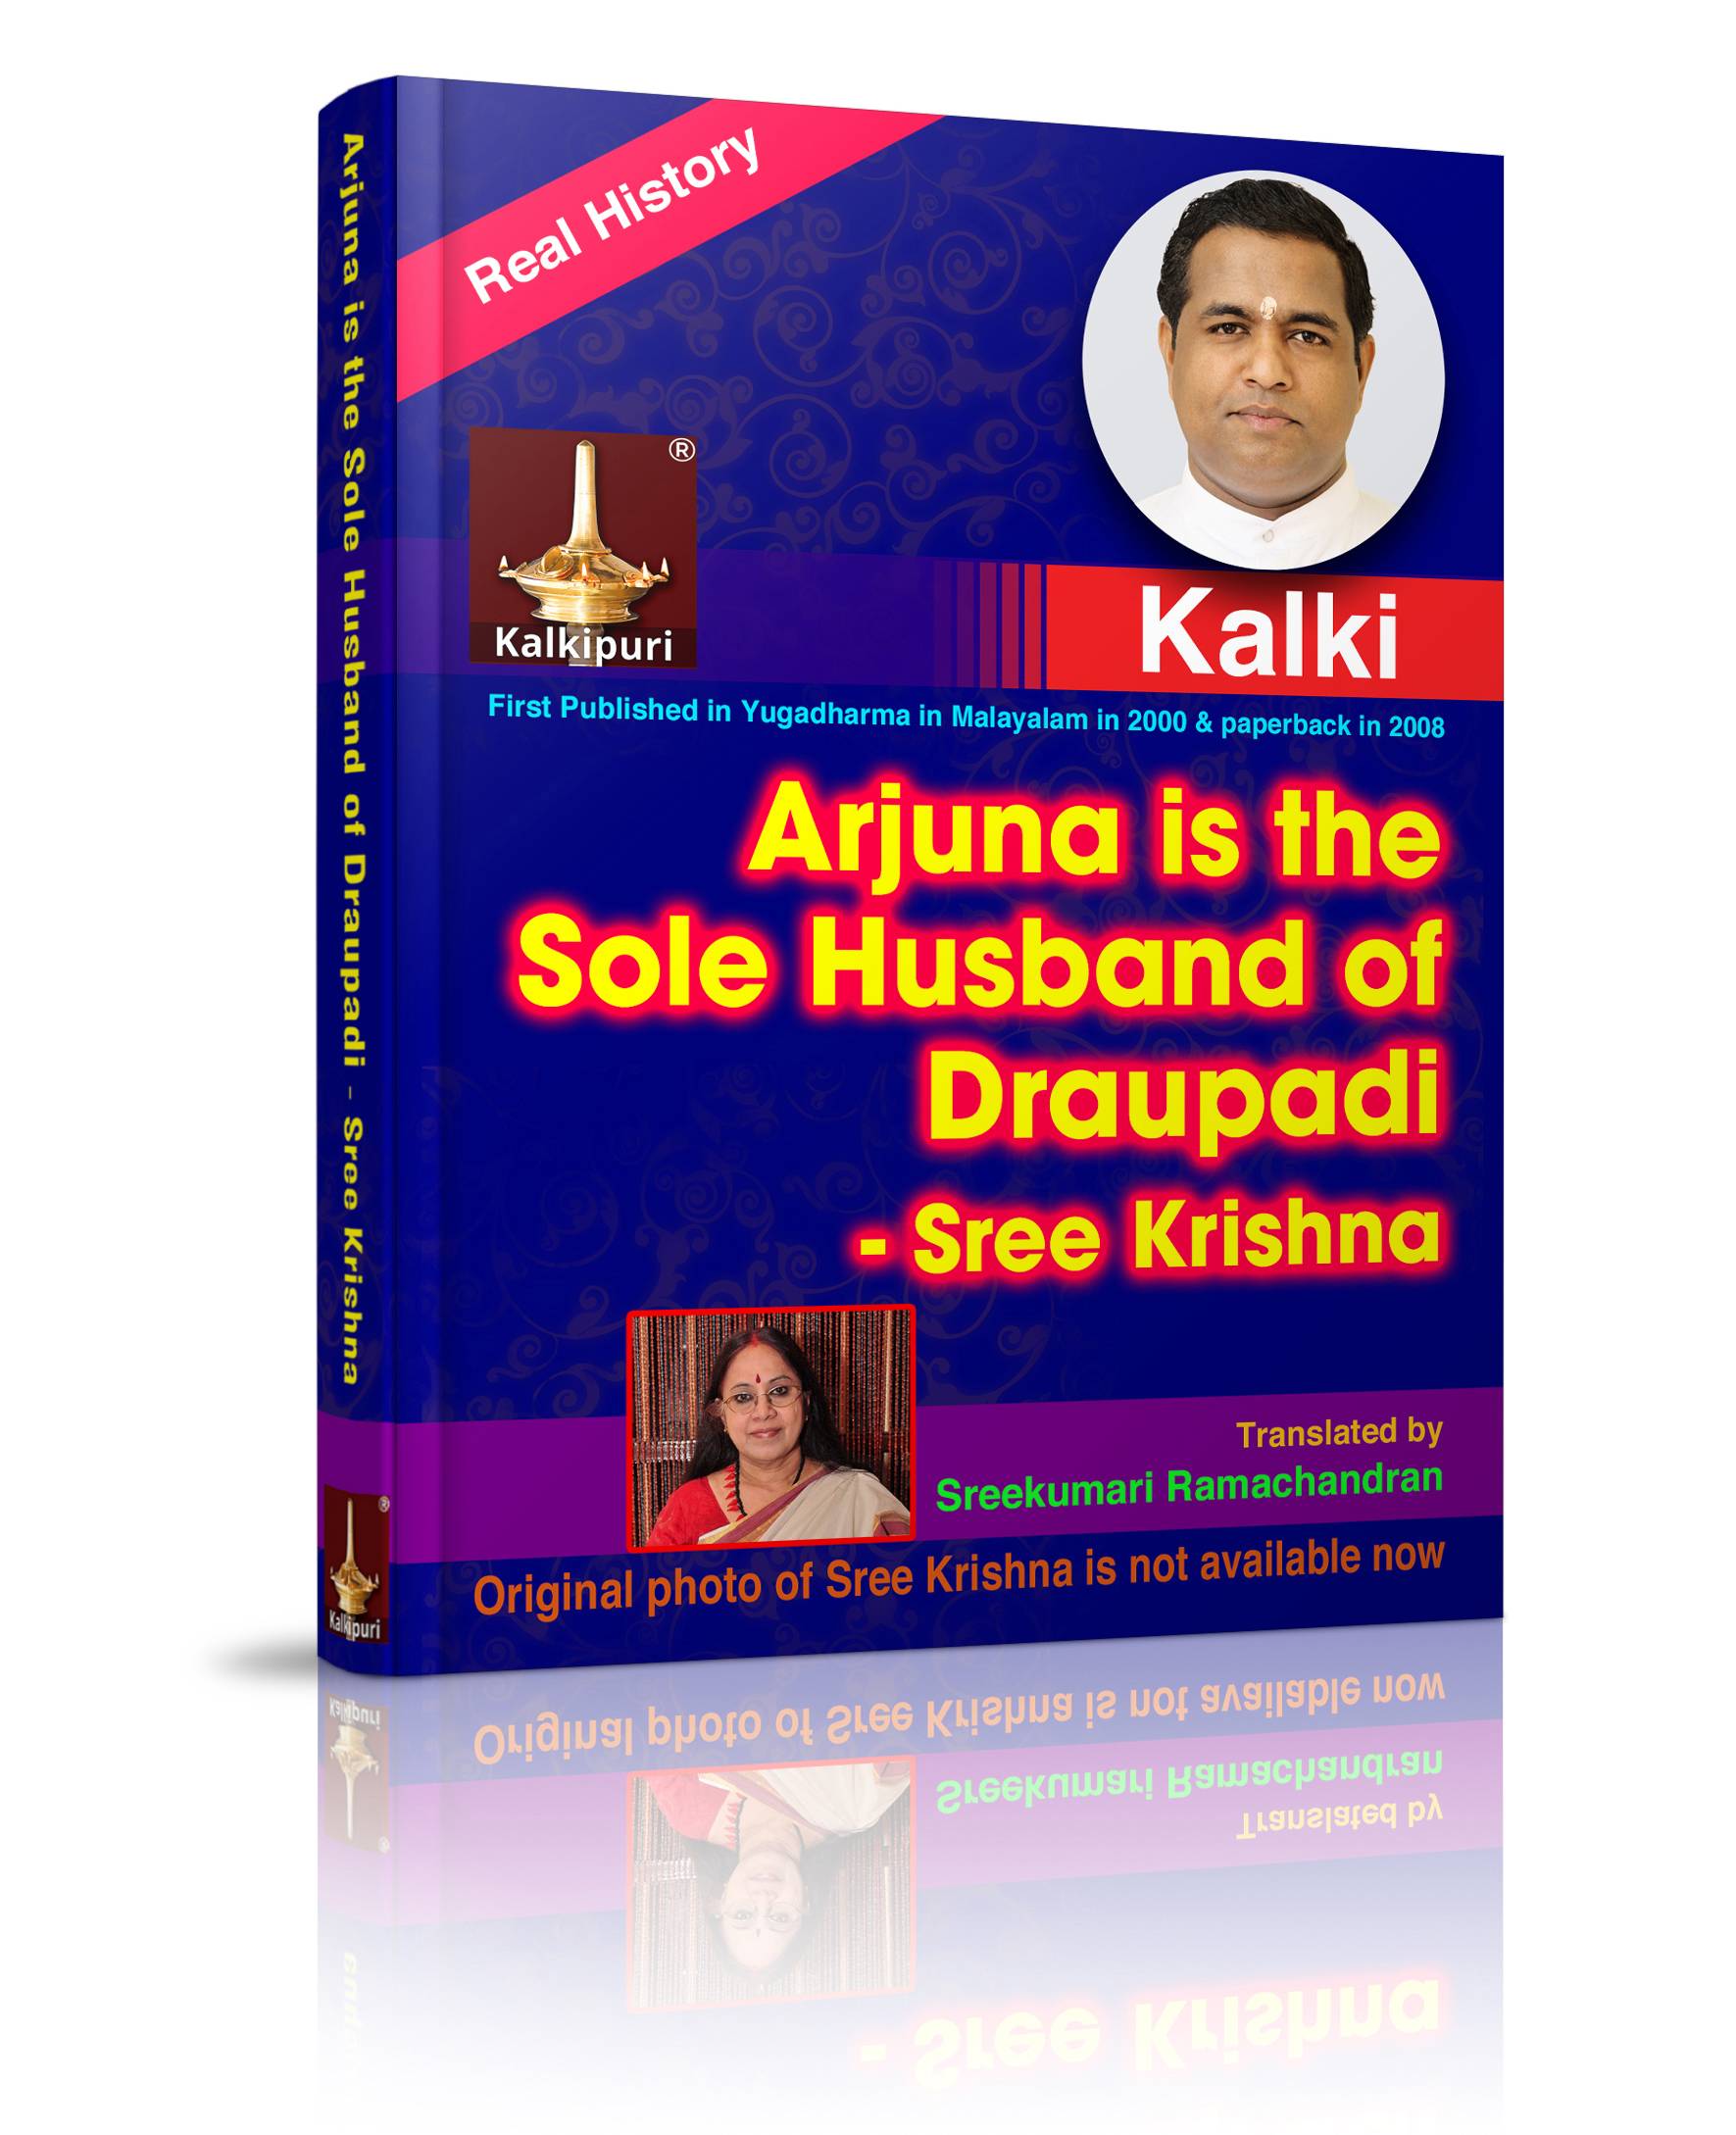 Book cover-Arjuna is the sole husband of Draupadi - Sree Krishna. Author: Kalki.